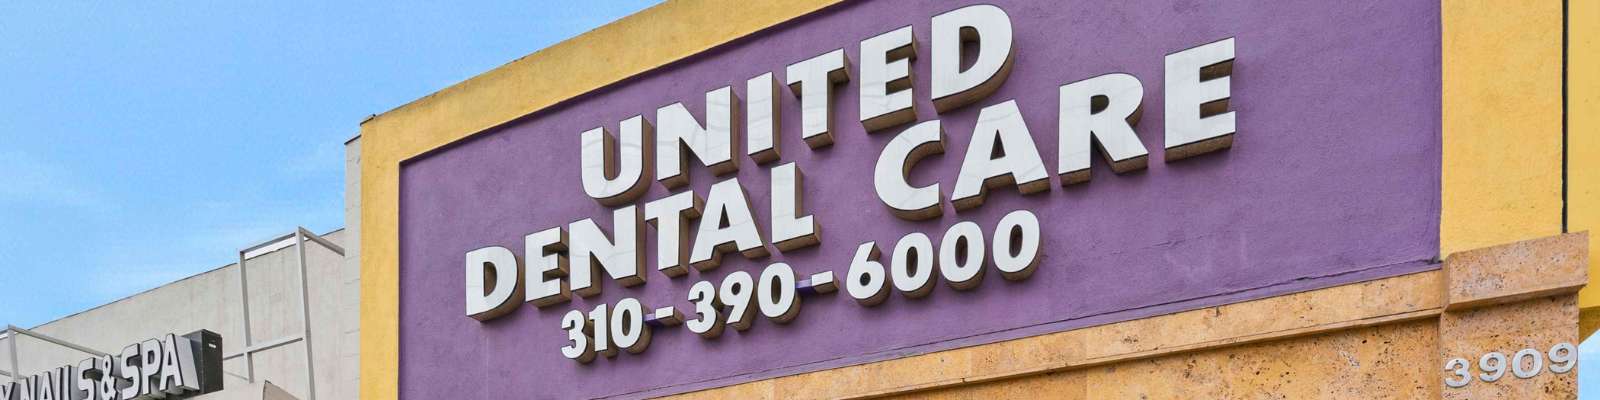 united dental care CA location